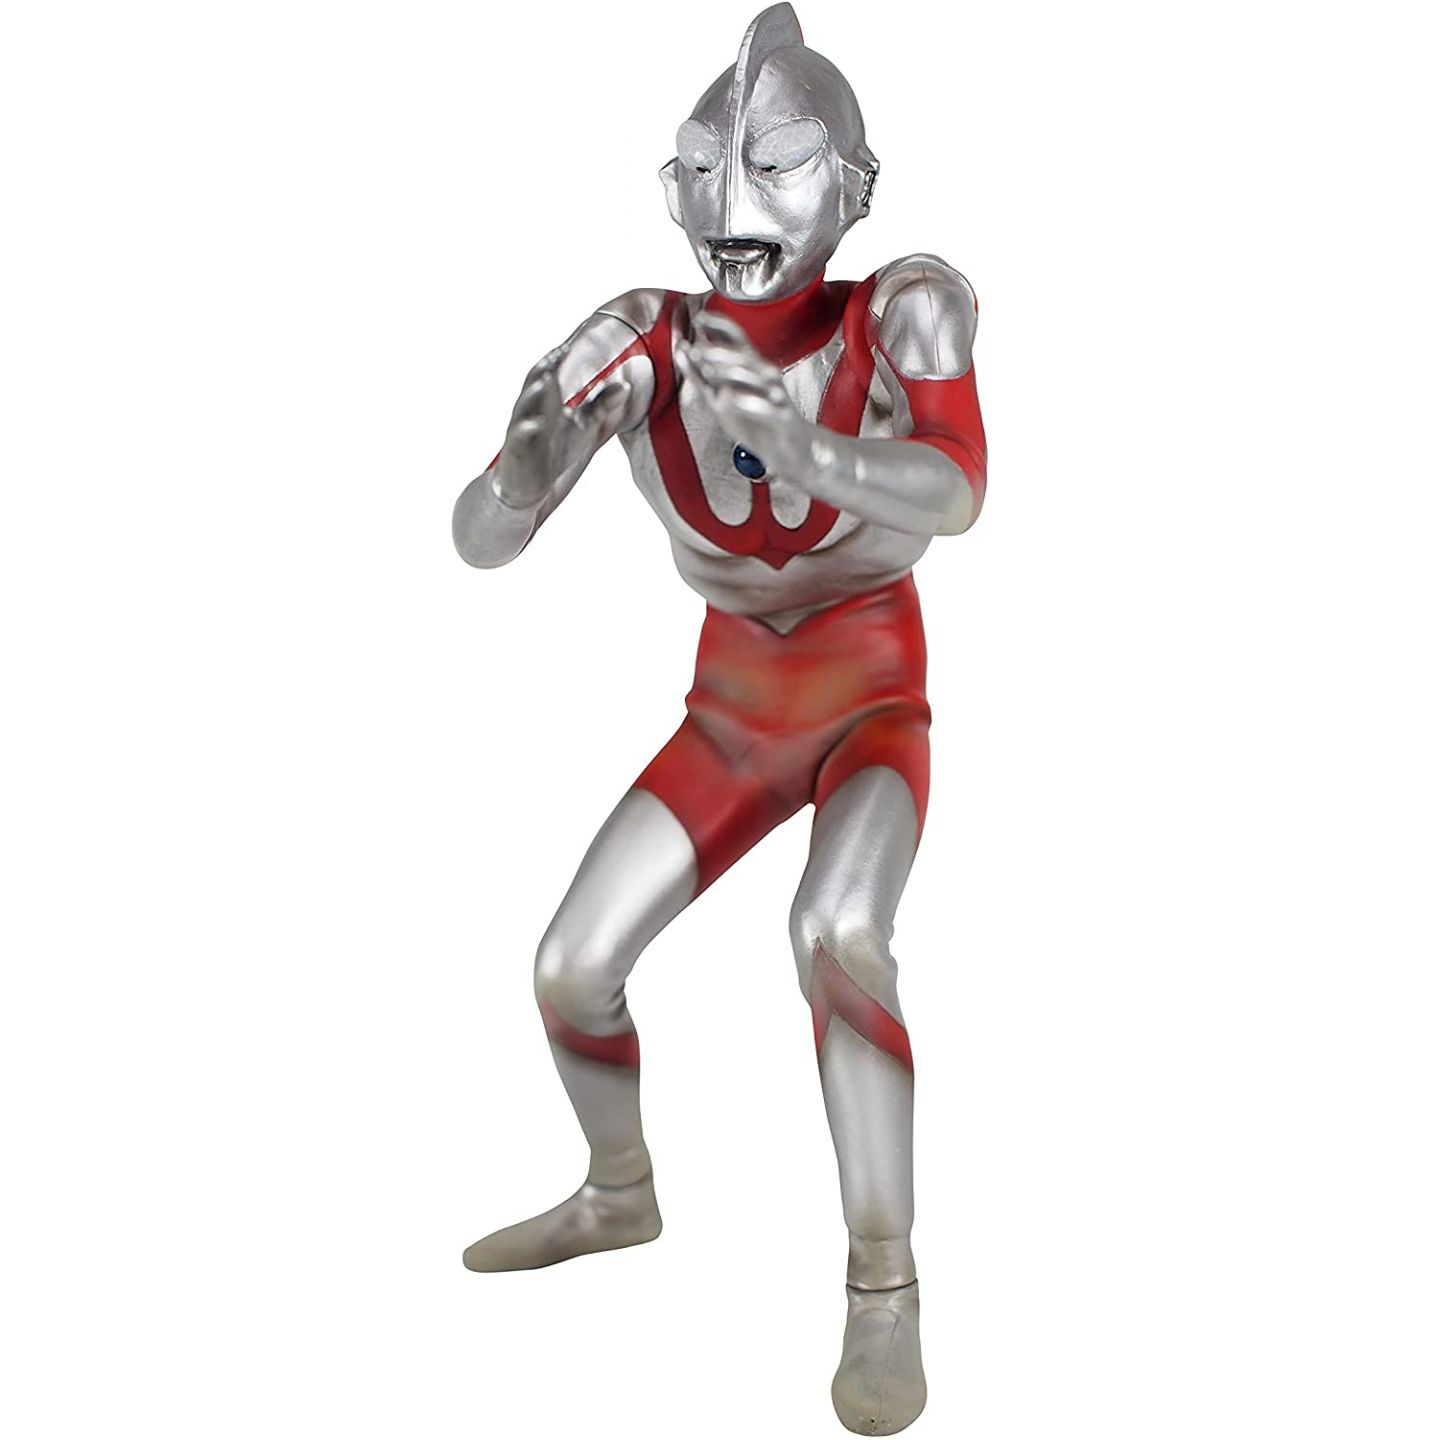 H3 Ultraman Pose Sample 04 by HeroineFactory on DeviantArt